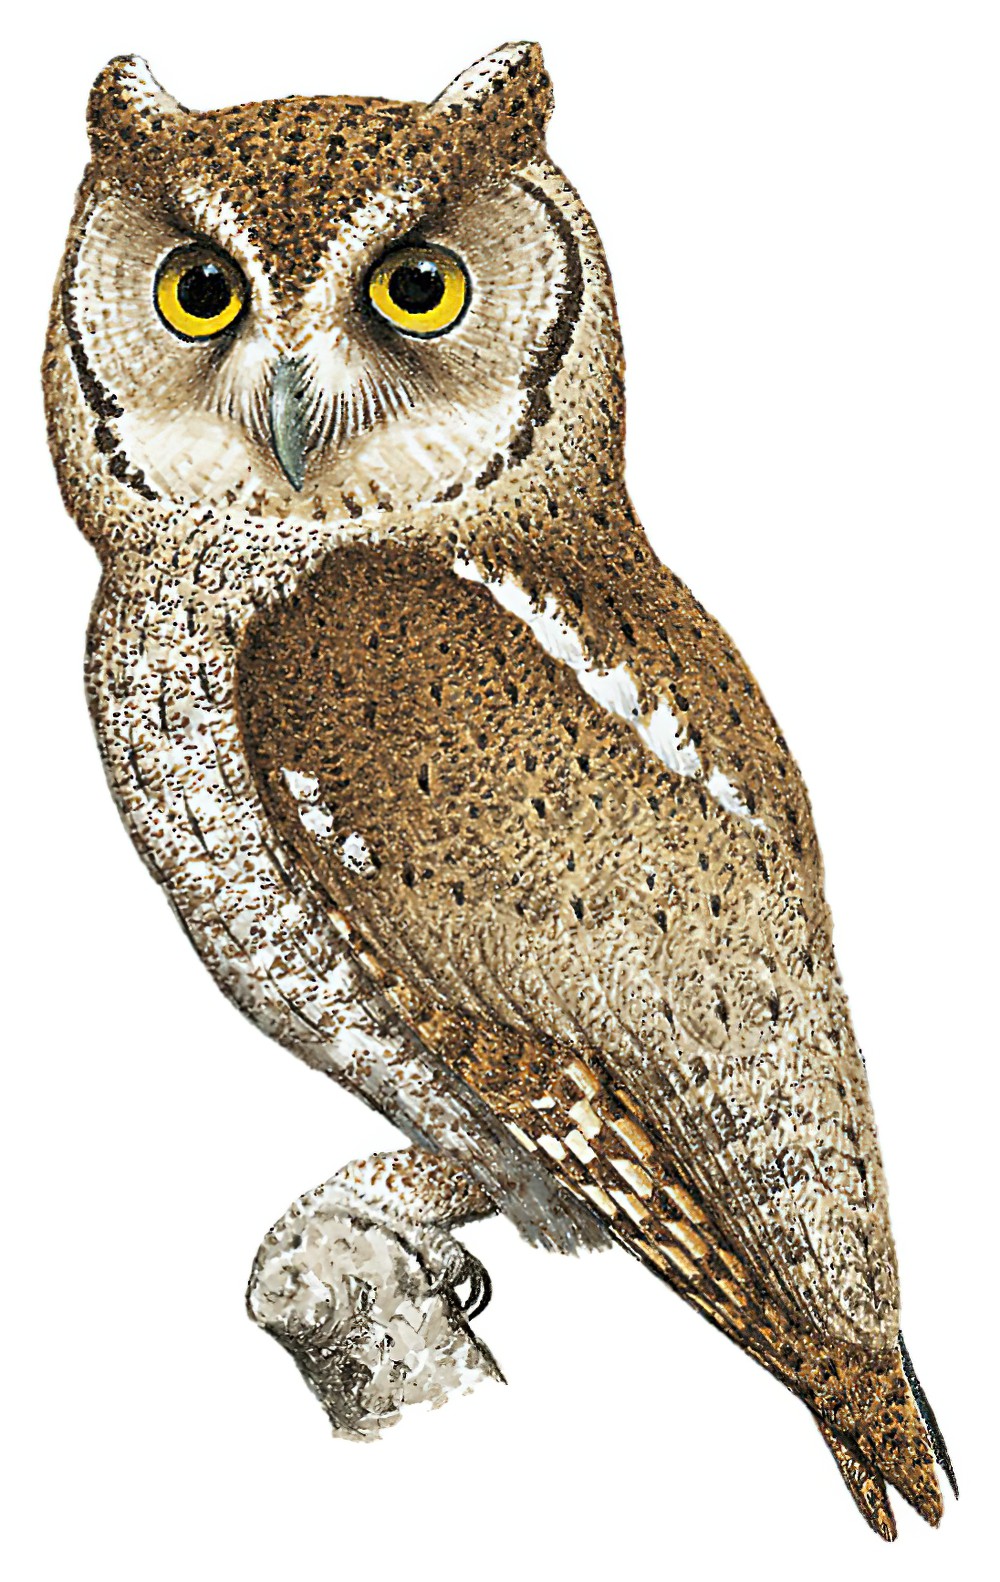 Pacific Screech-Owl / Megascops cooperi